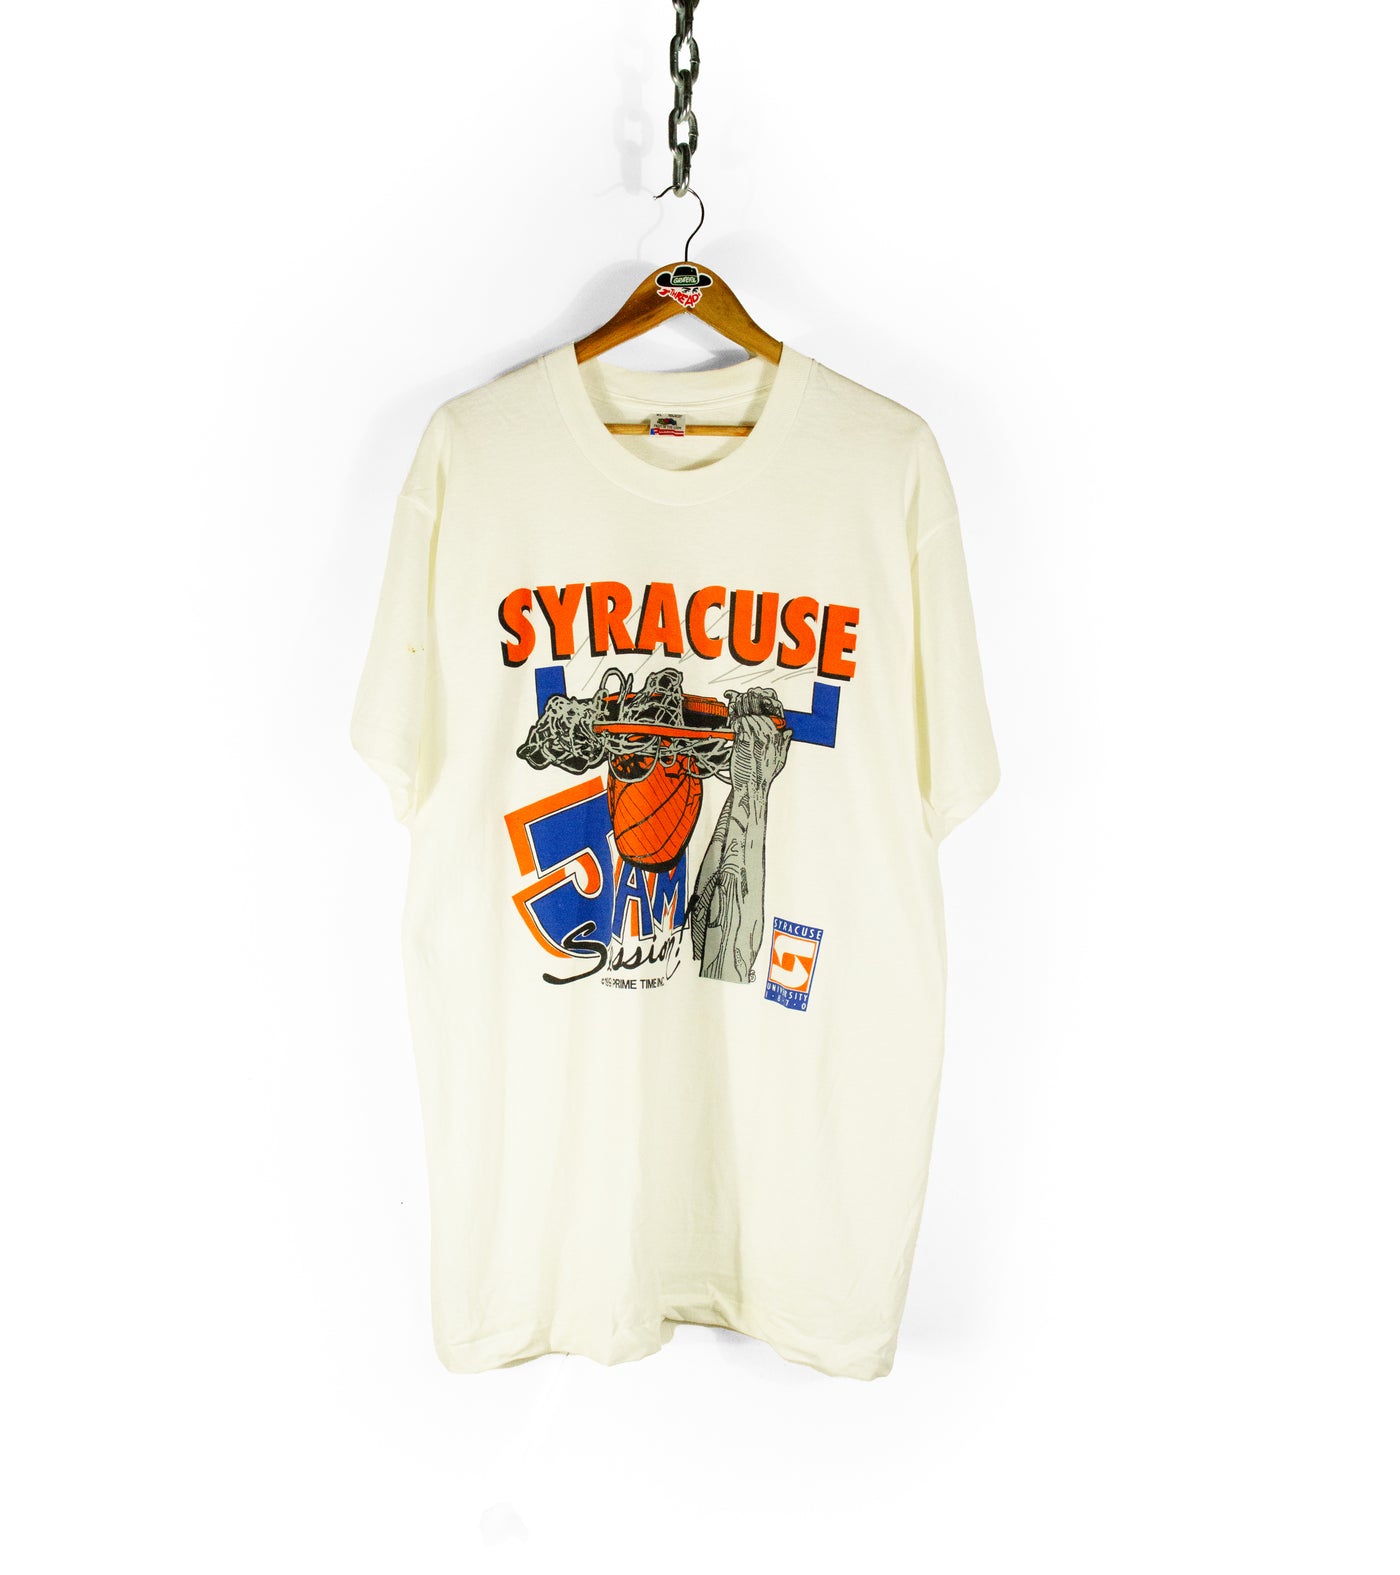 Vintage 1992 Syracuse Jam Session T-Shirt